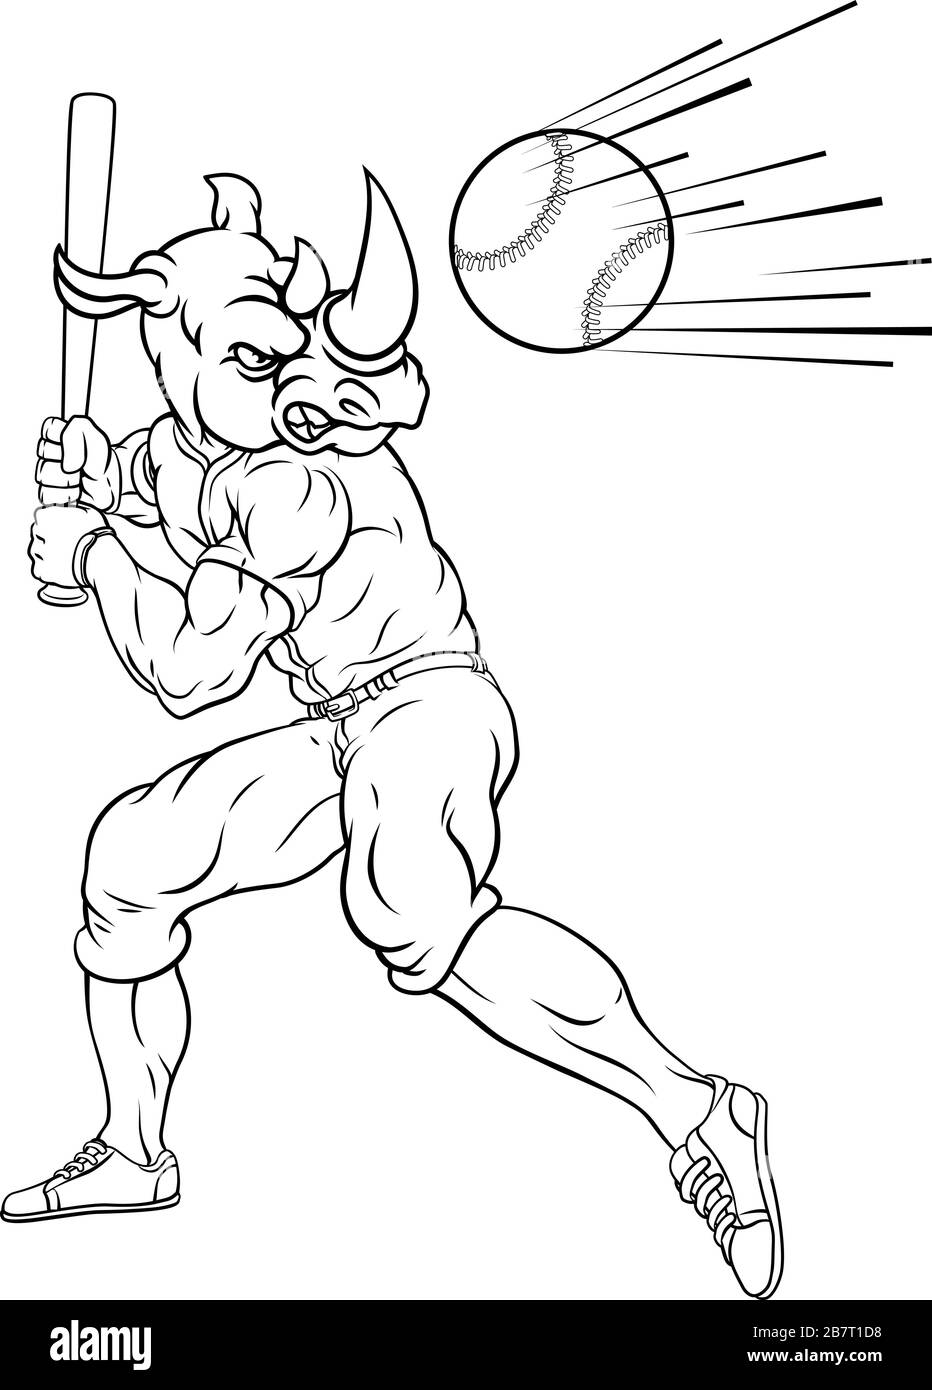 Rhino Baseball Player Mascot Swinging Bat at Ball Stock Vector